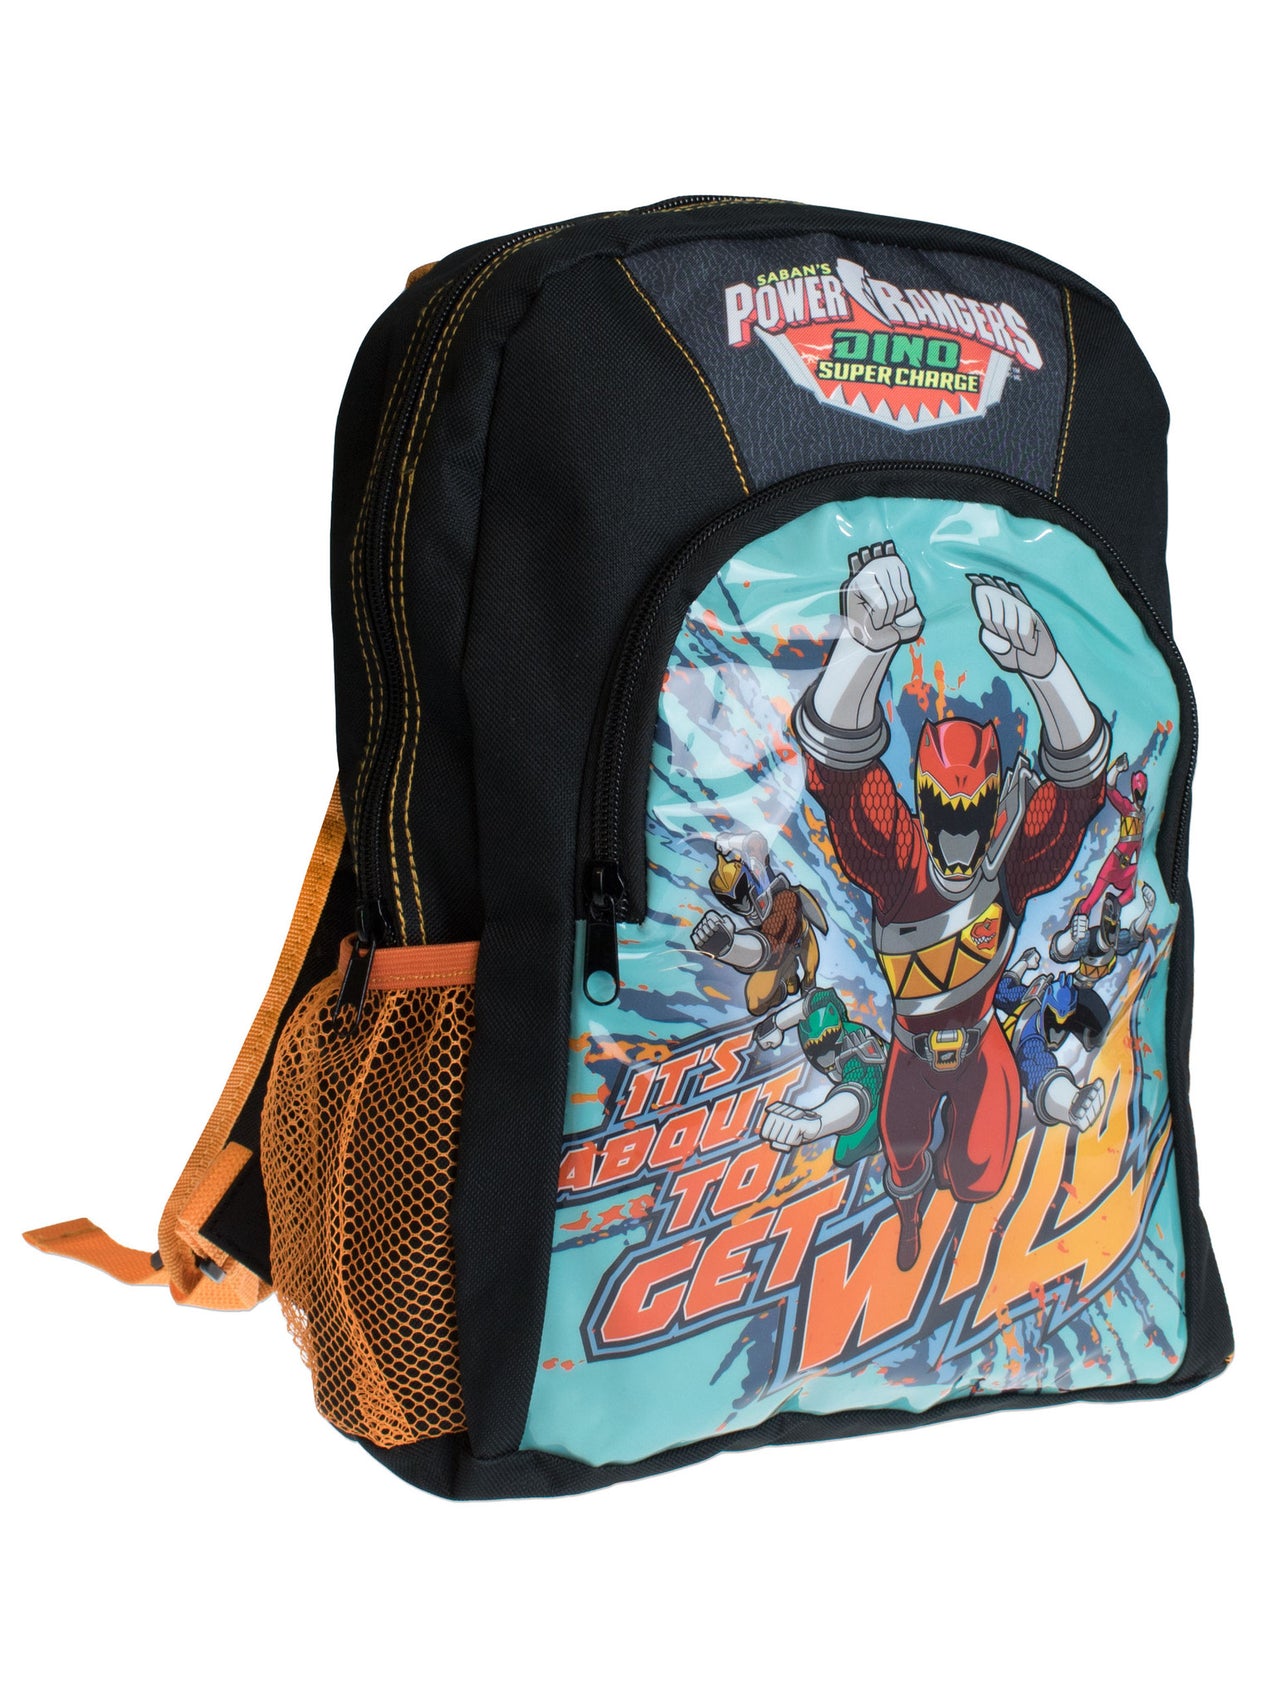 Buy Power Rangers Backpack | Kids | Character.com Official Merchandise